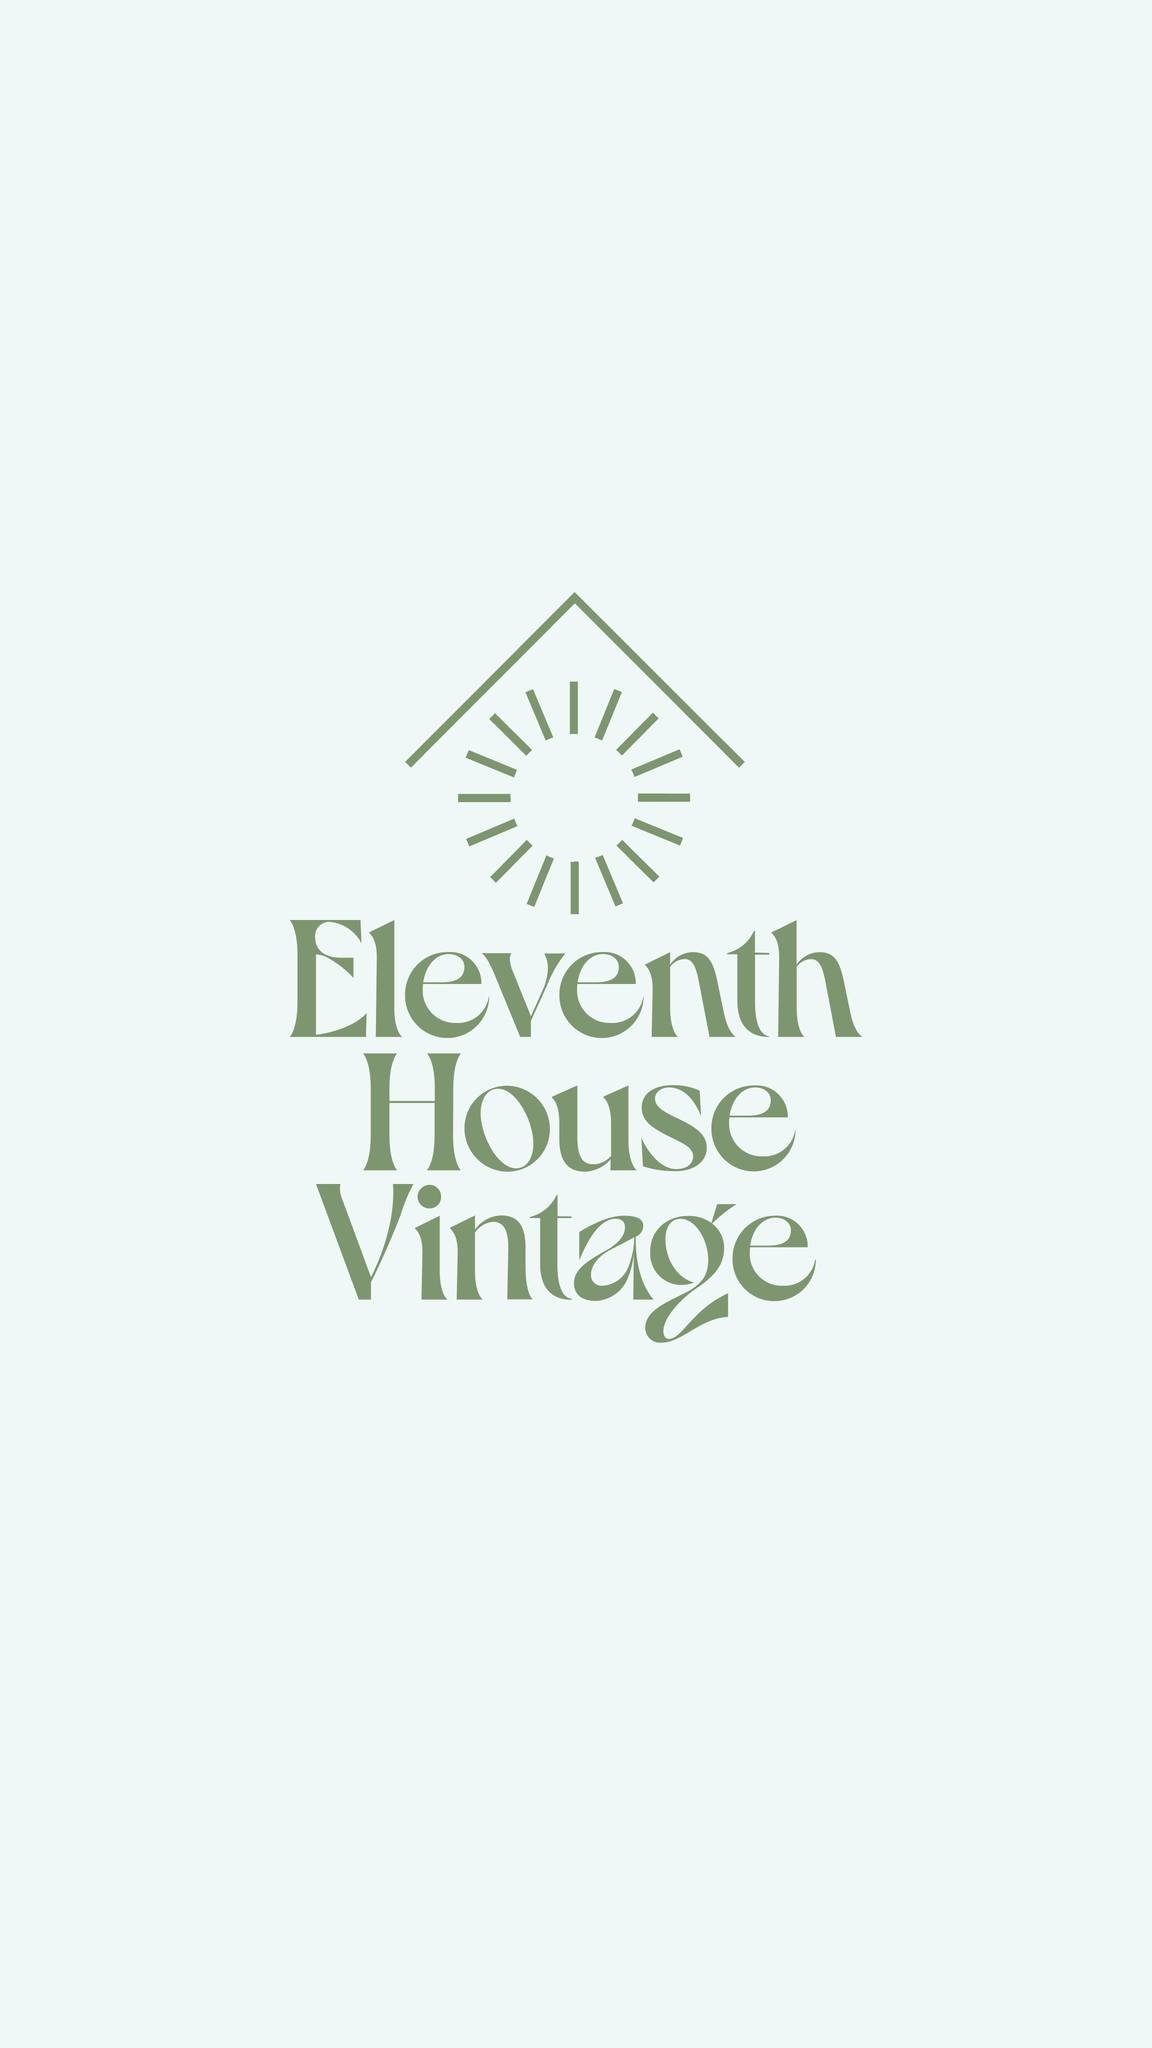 the logo for eleven house vintage.